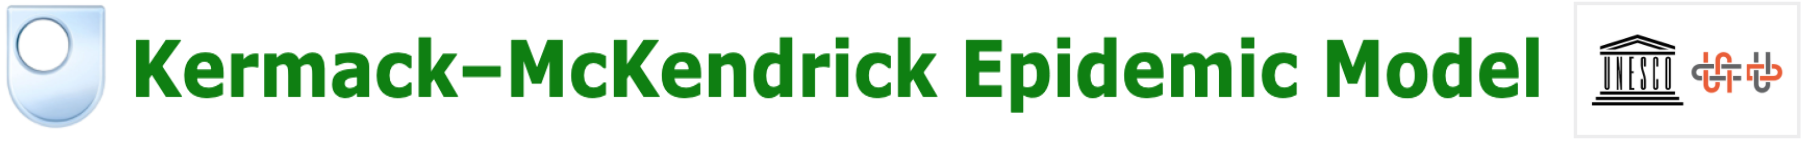 Kermack-McKendrick Epidemic Model banner